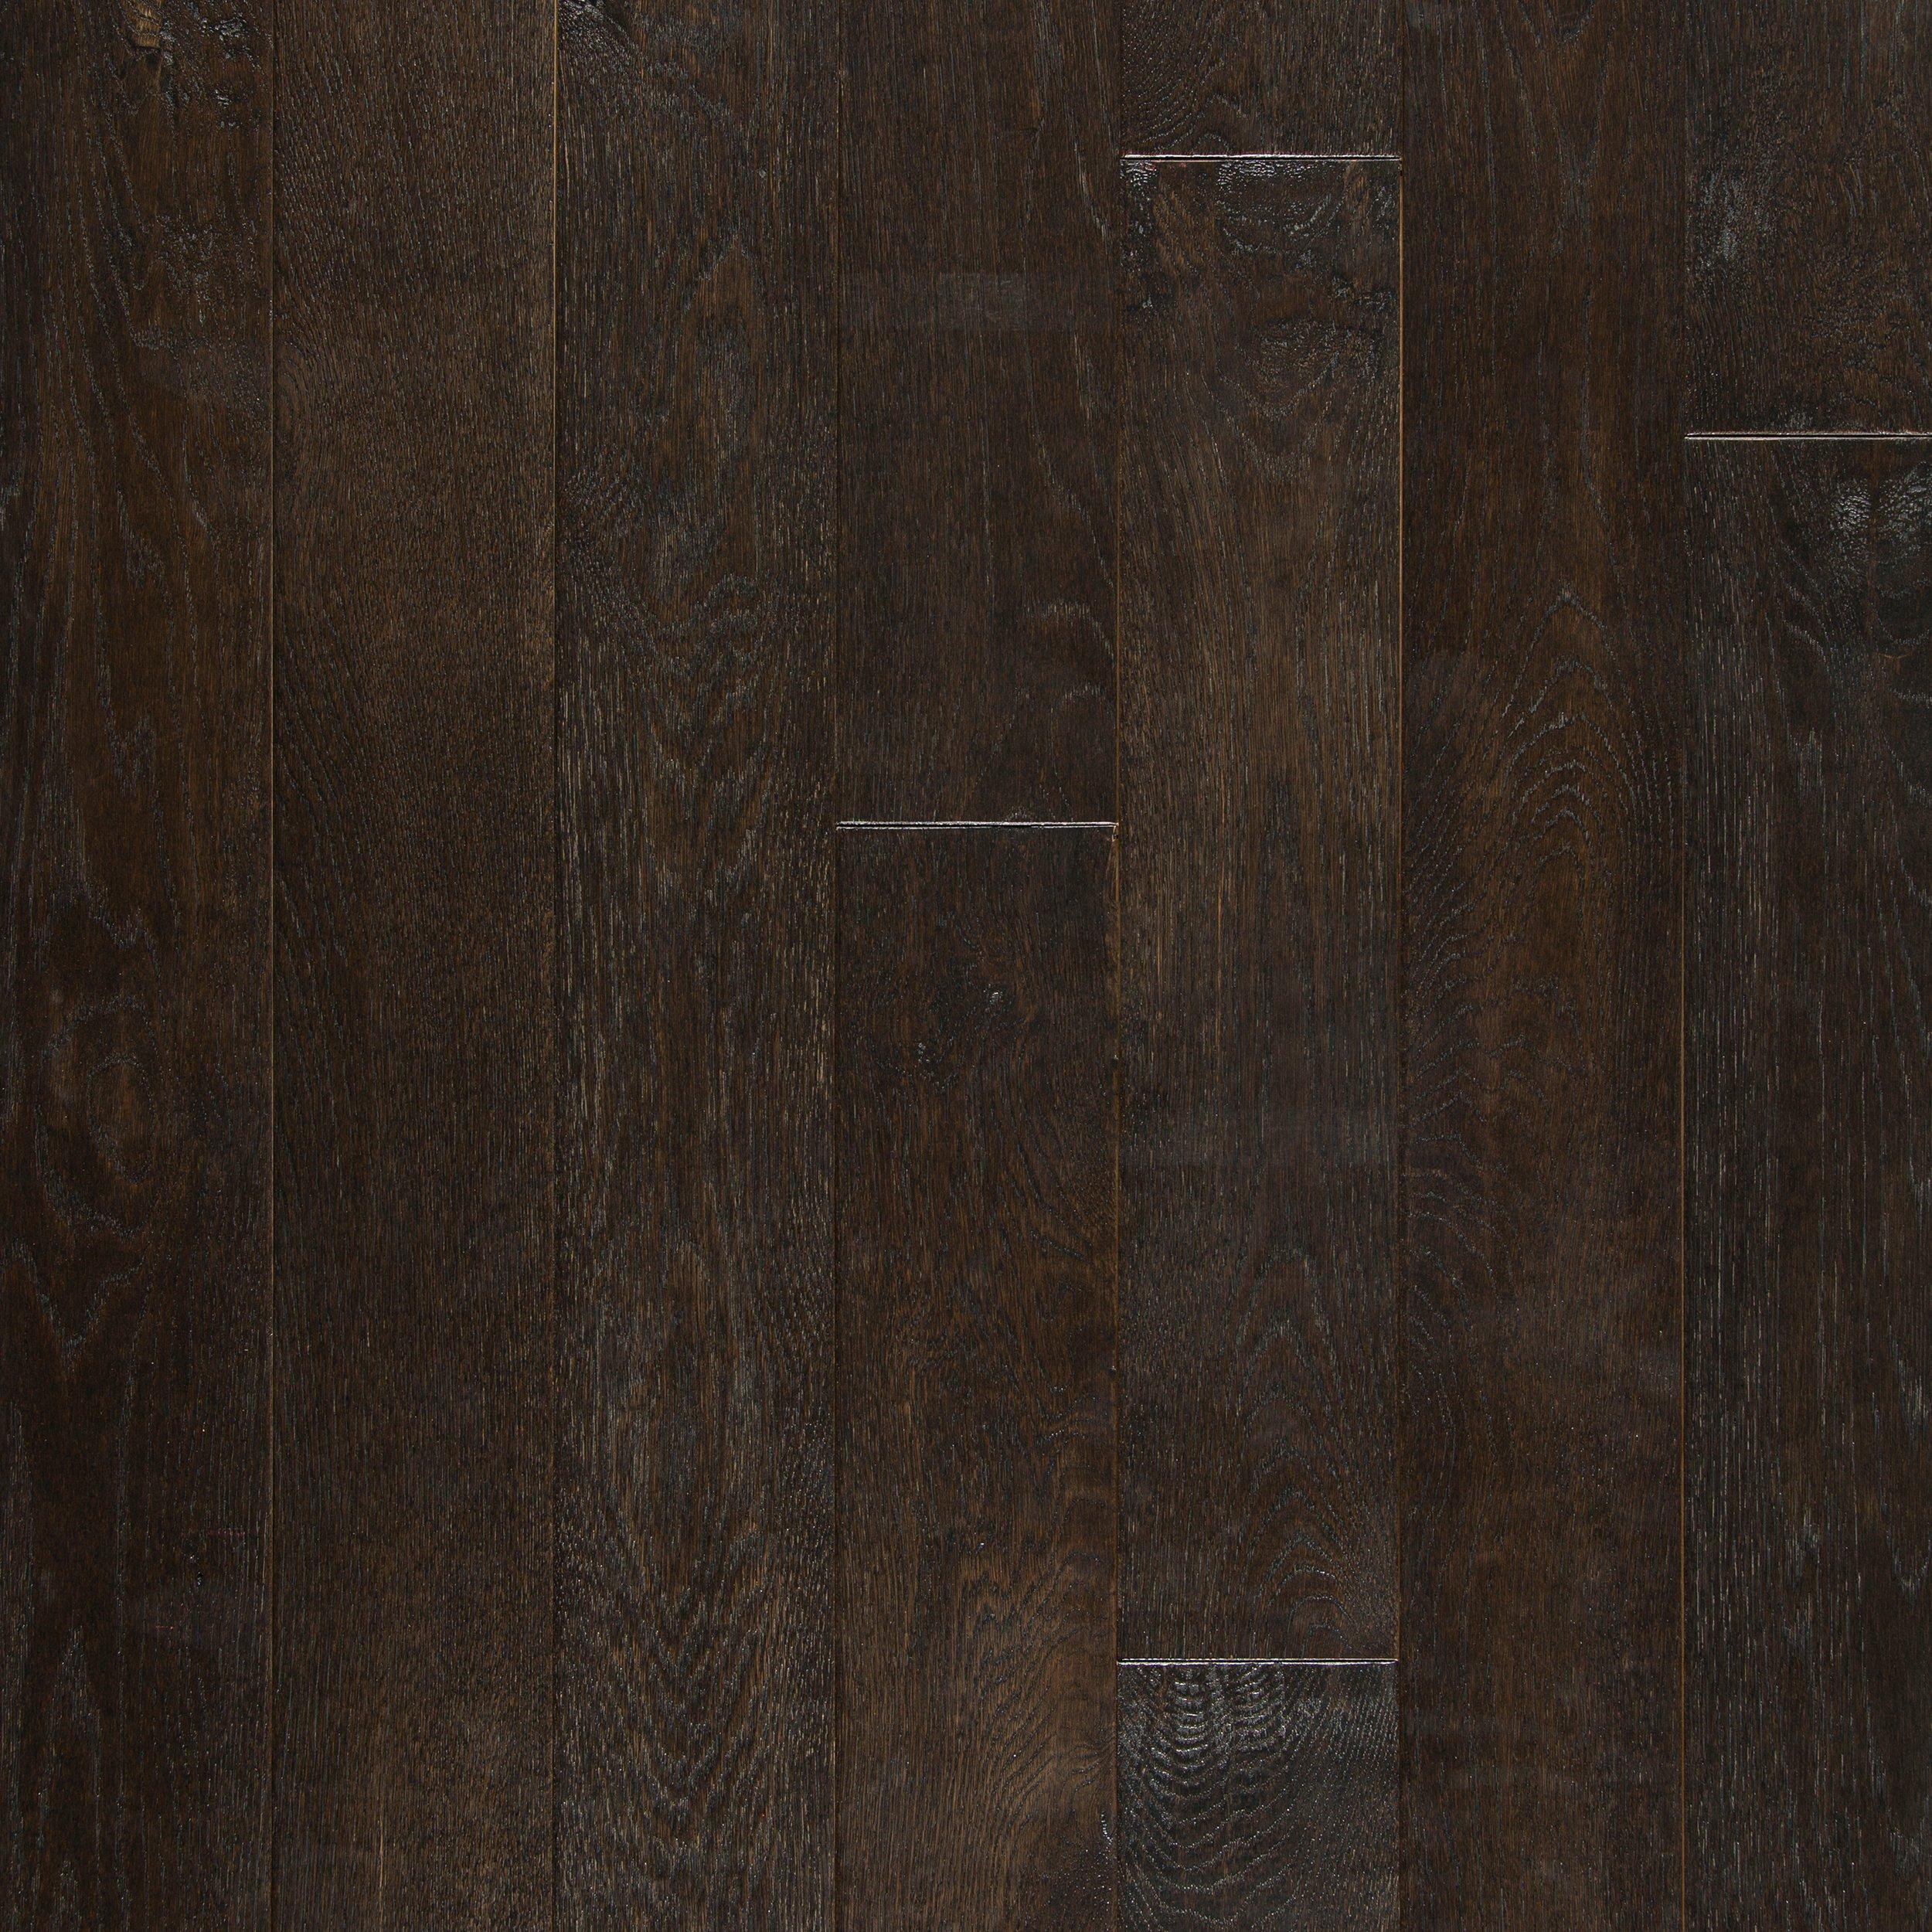 Torrace White Oak Distressed Solid Hardwood